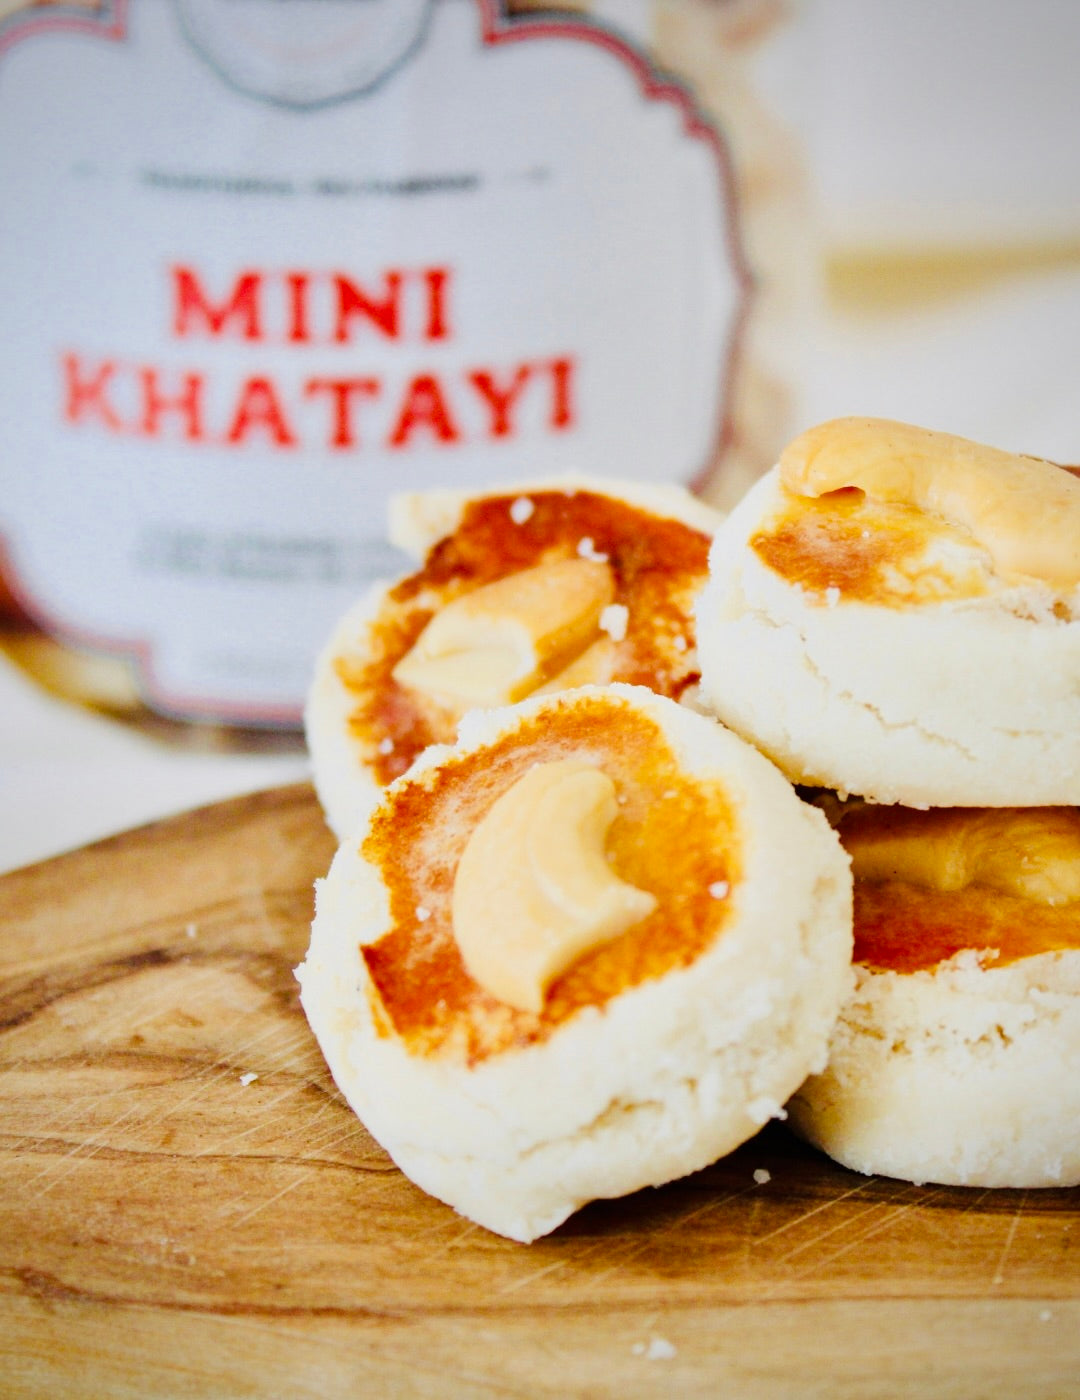 Matamaal's Mini Khatayi